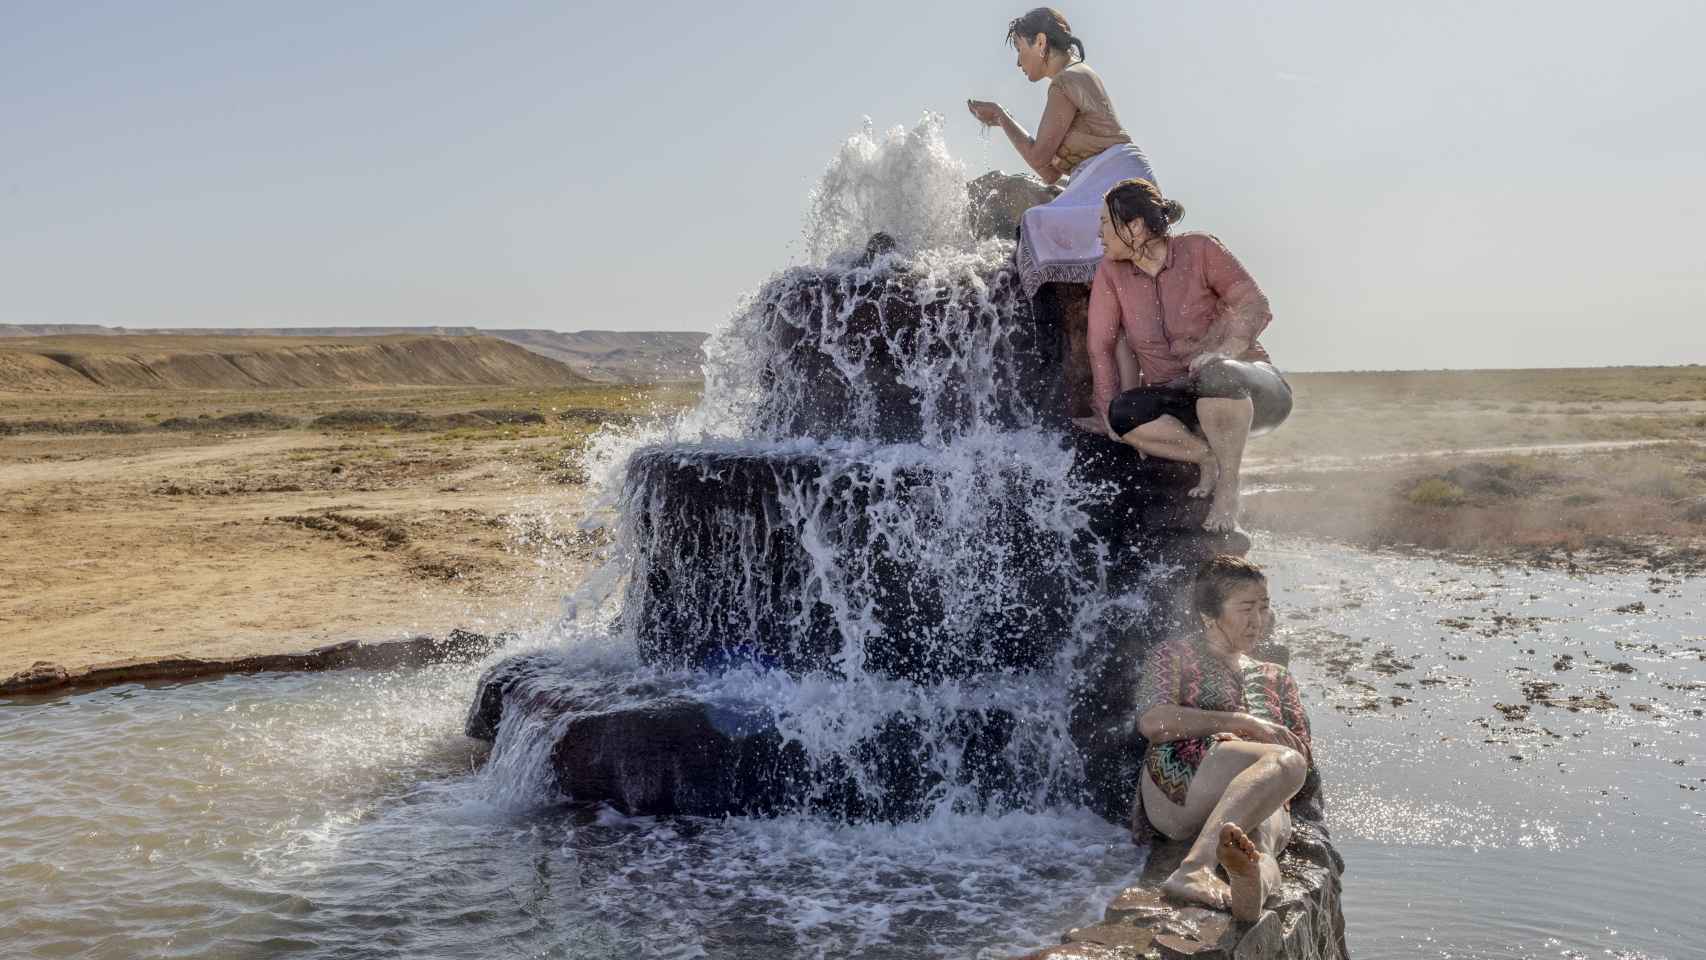 Proyecto a Largo Plazo, de la armenia Anush Babajanyan - Aguas maltratadas